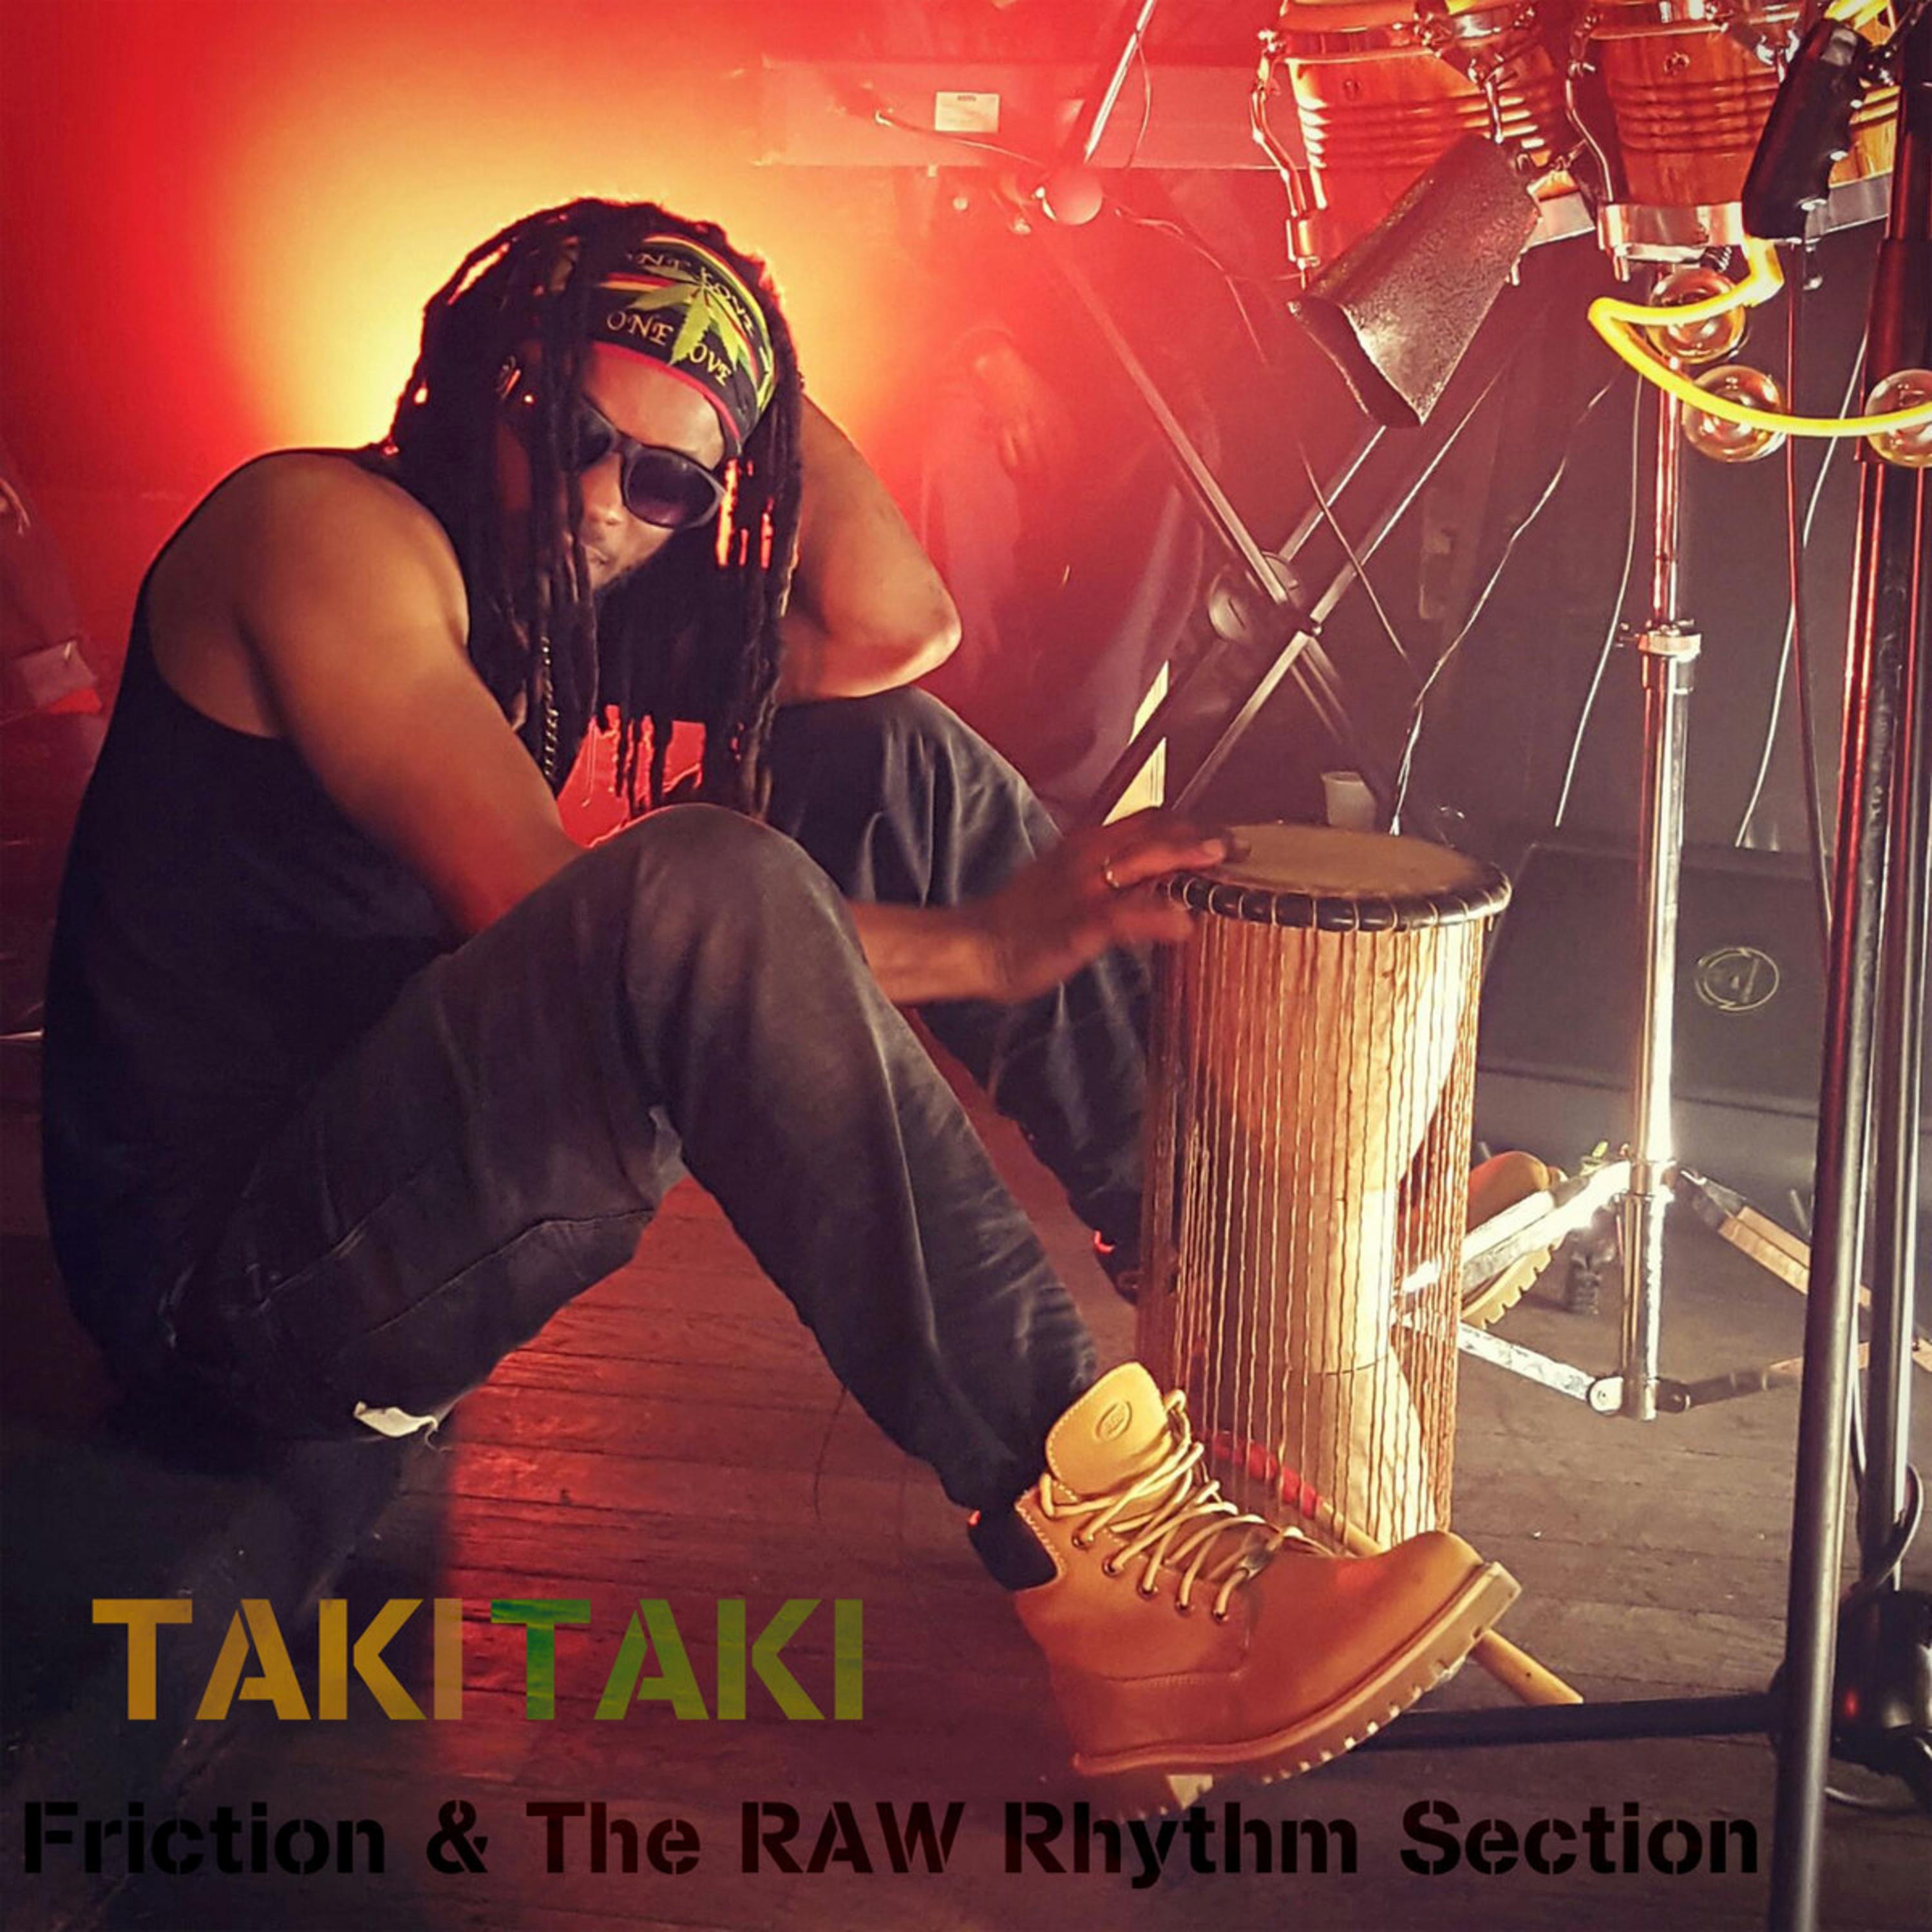 Friction & The Raw Rhythm Section - Taki Taki